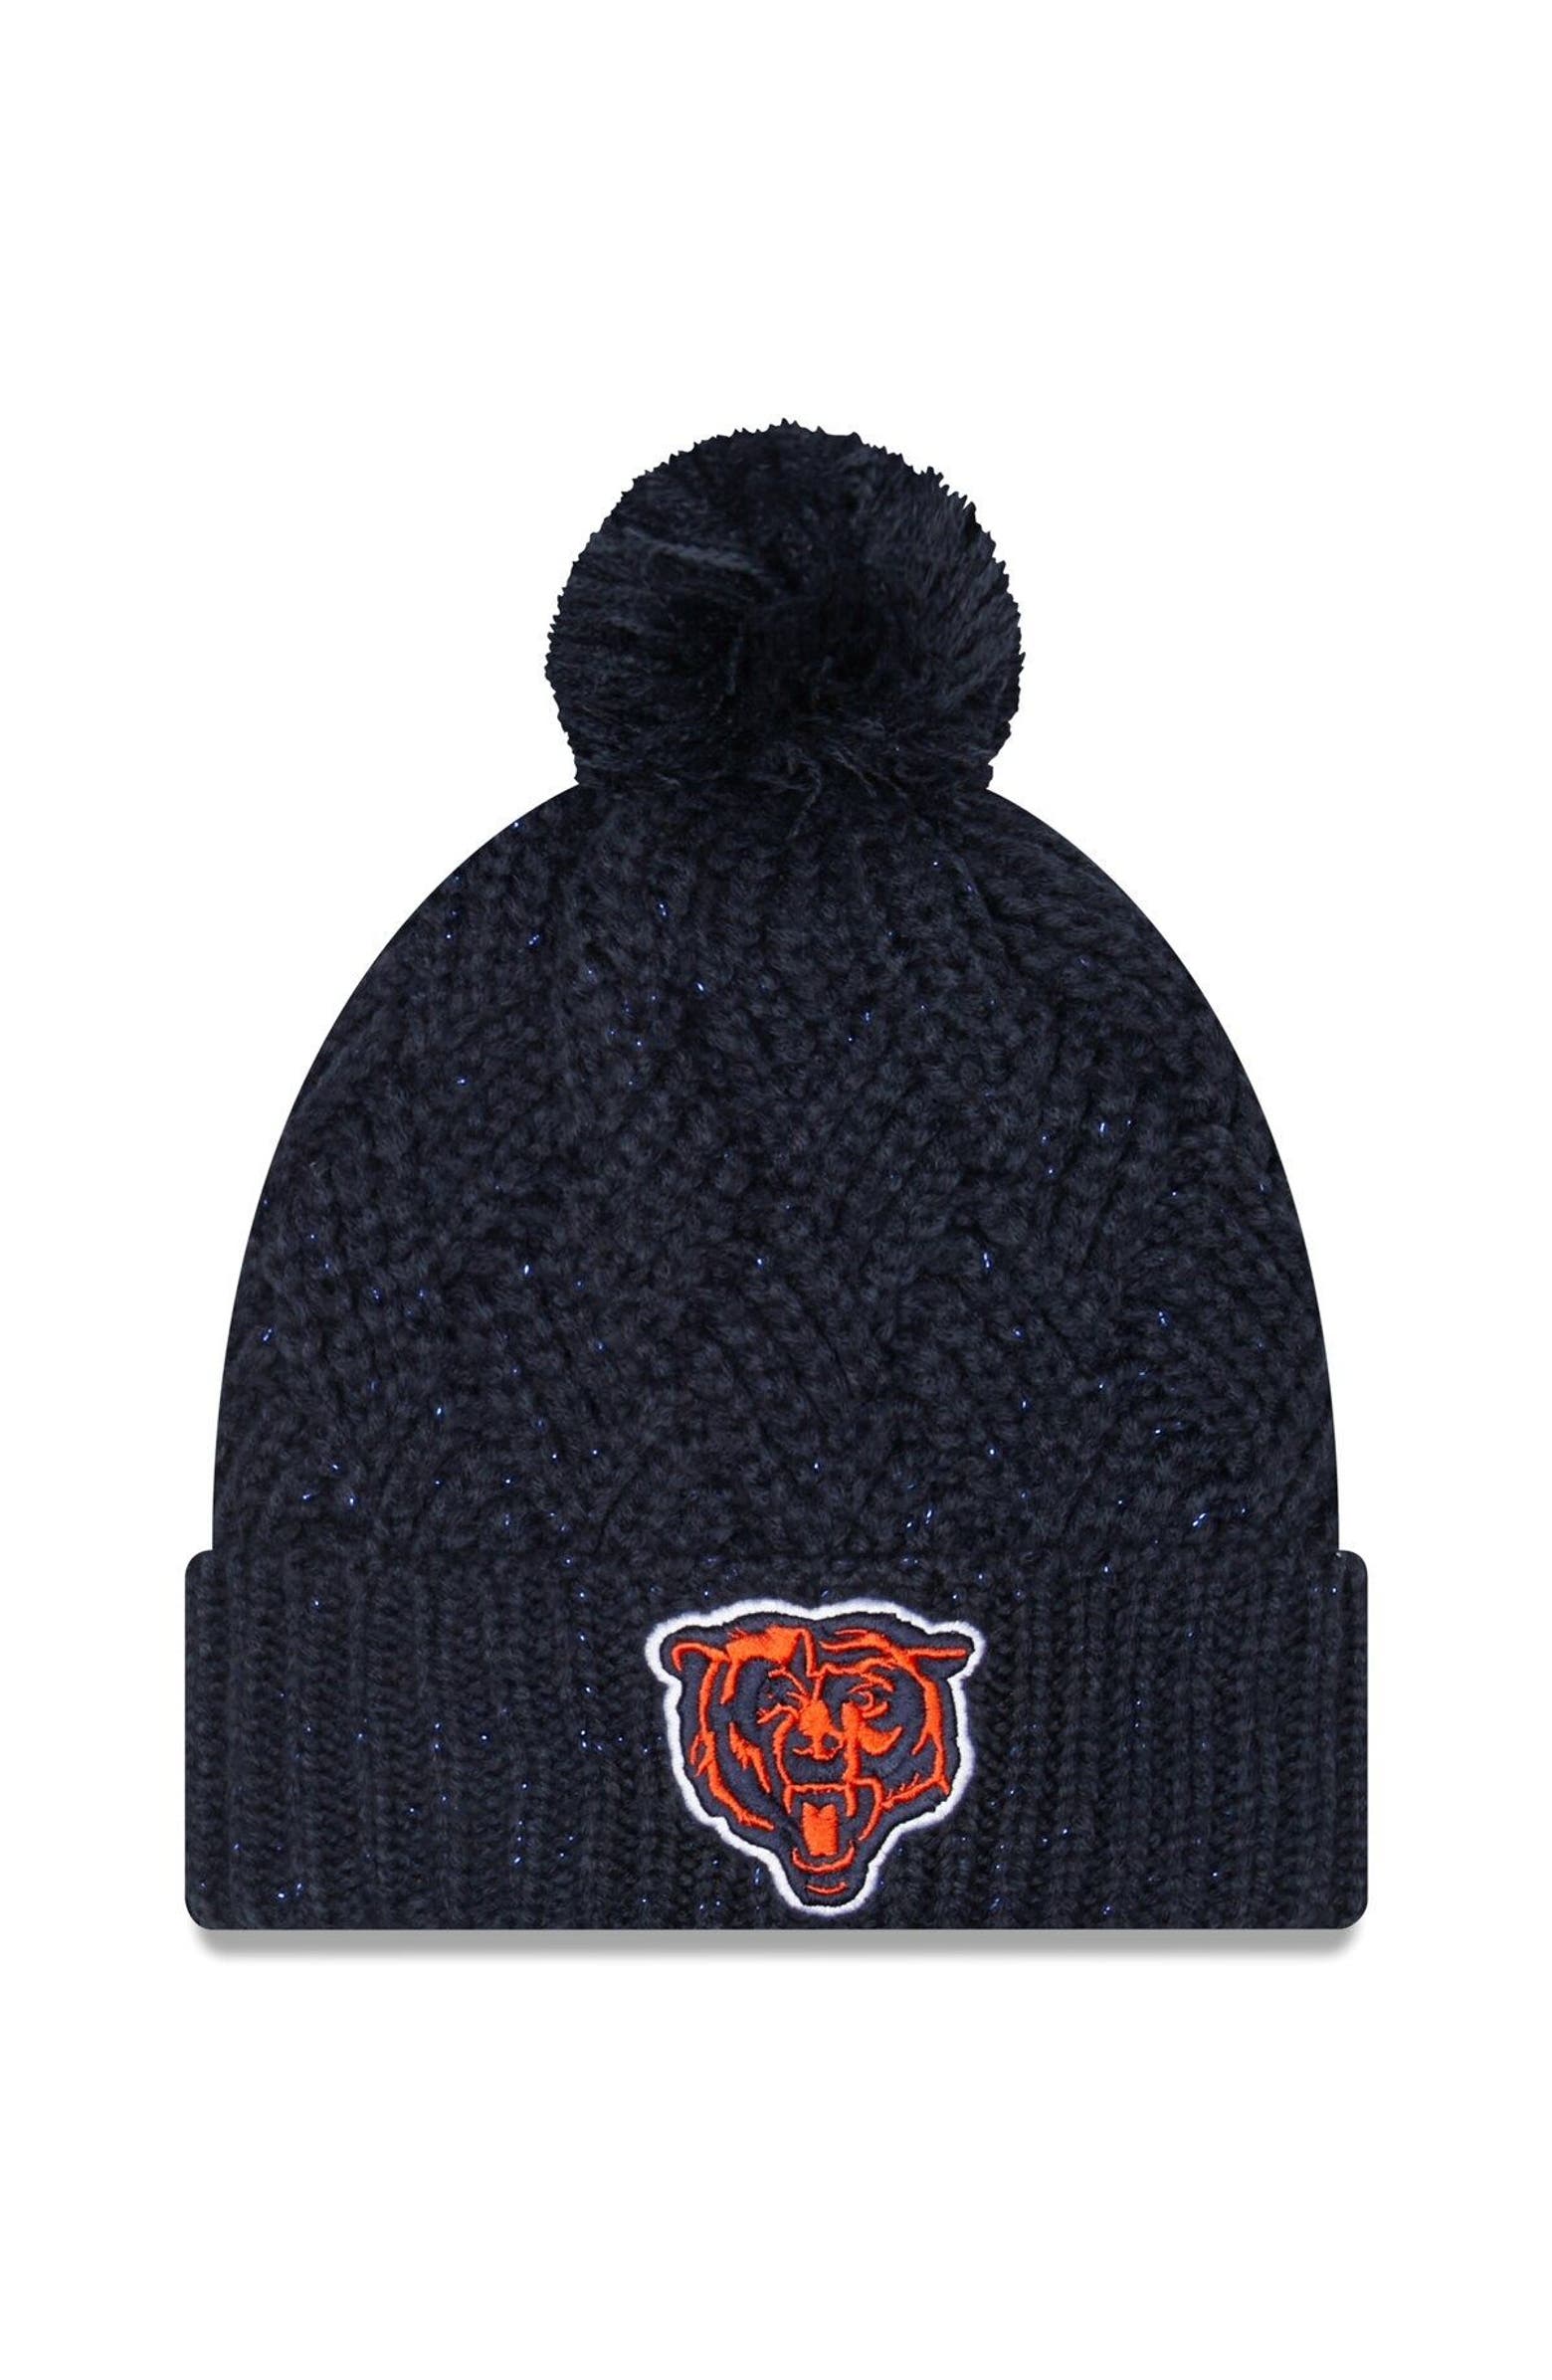 New Era Women's New Era Navy Chicago Bears Brisk Cuffed Knit Hat with